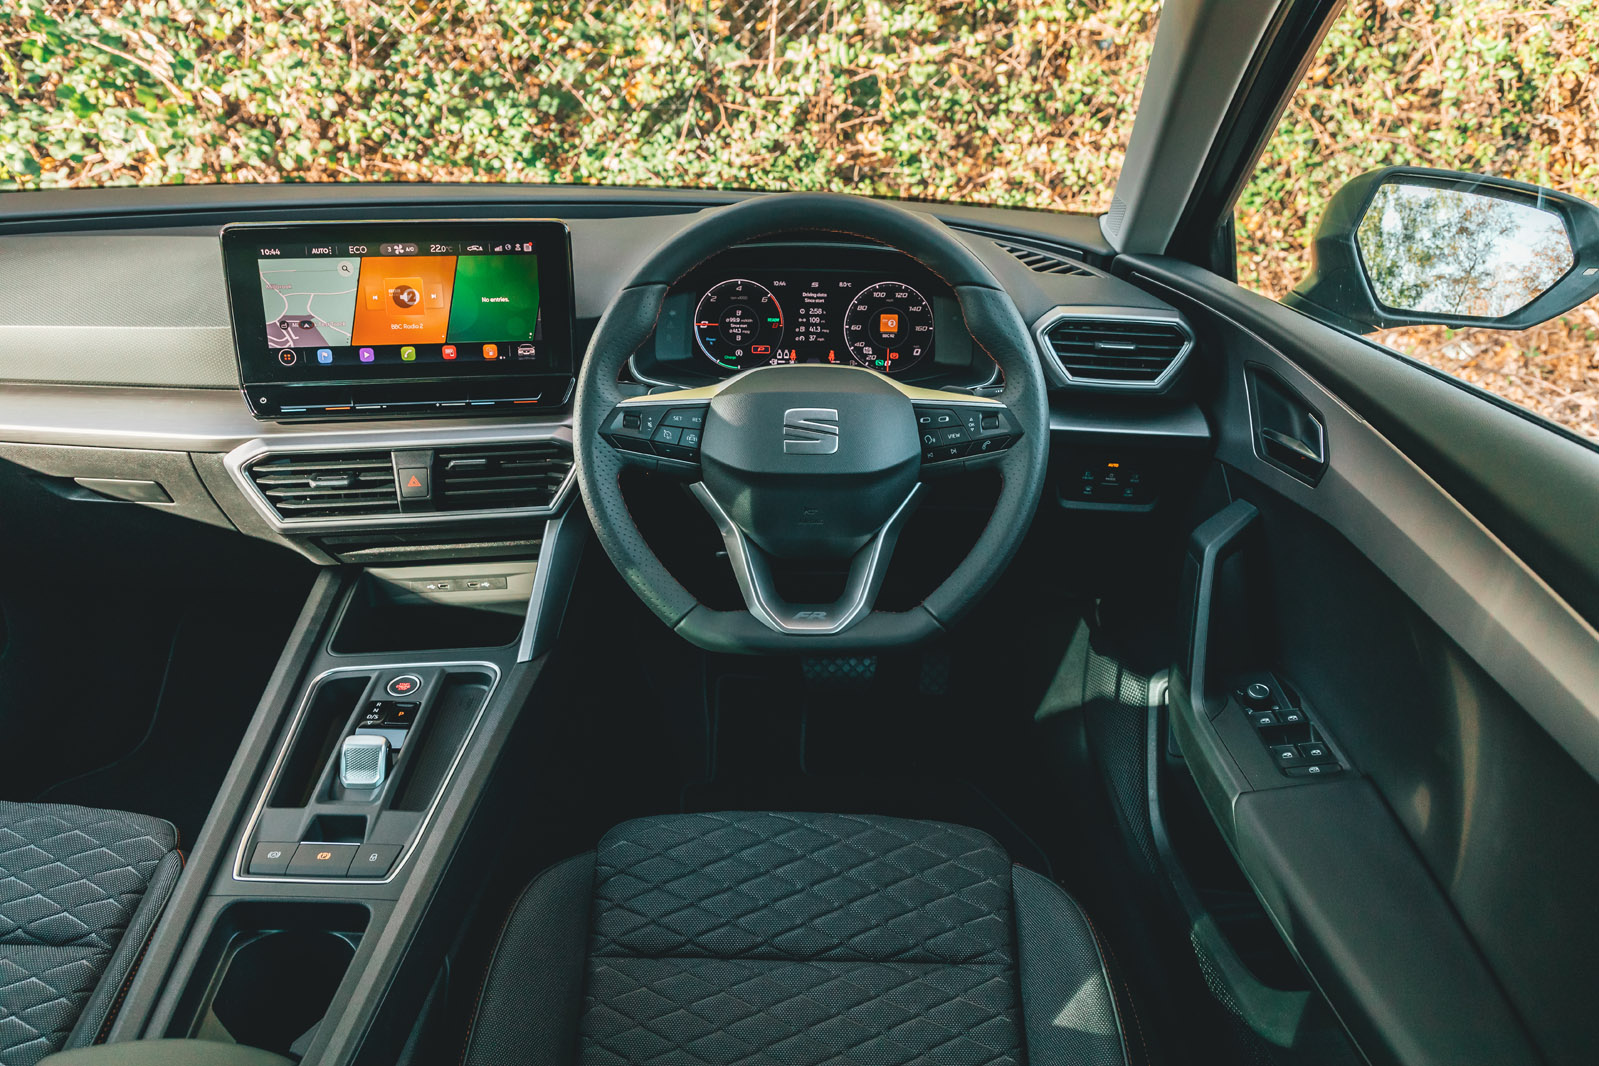 Seat Leon ST (Mk4) 2020 – Actual